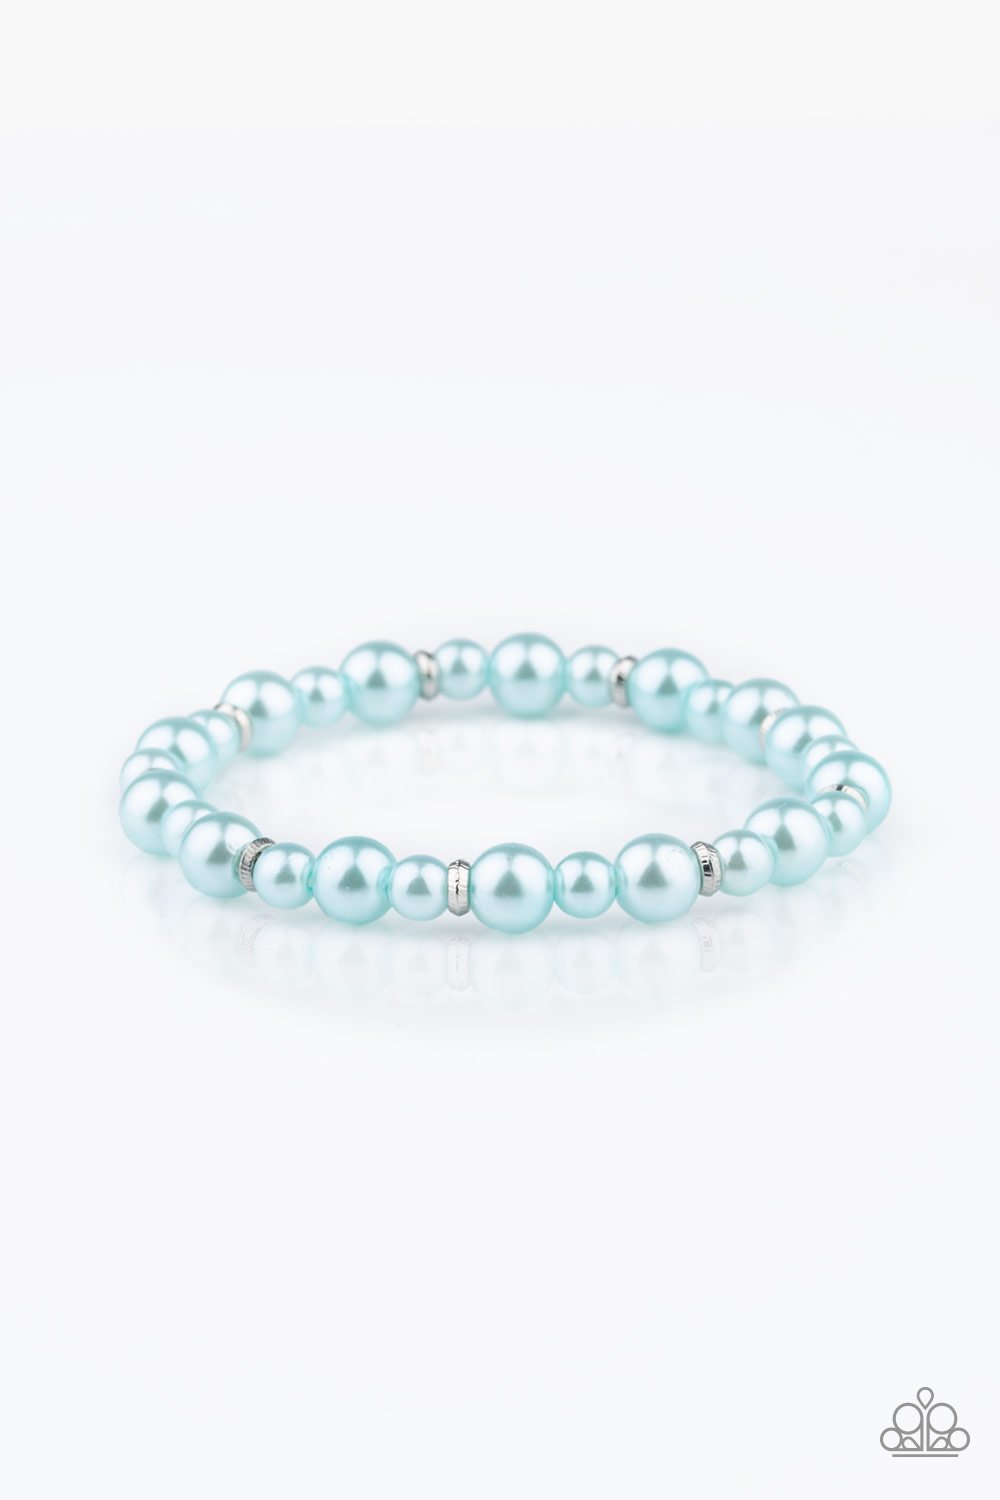 Powder and Pearls - Blue Bracelet